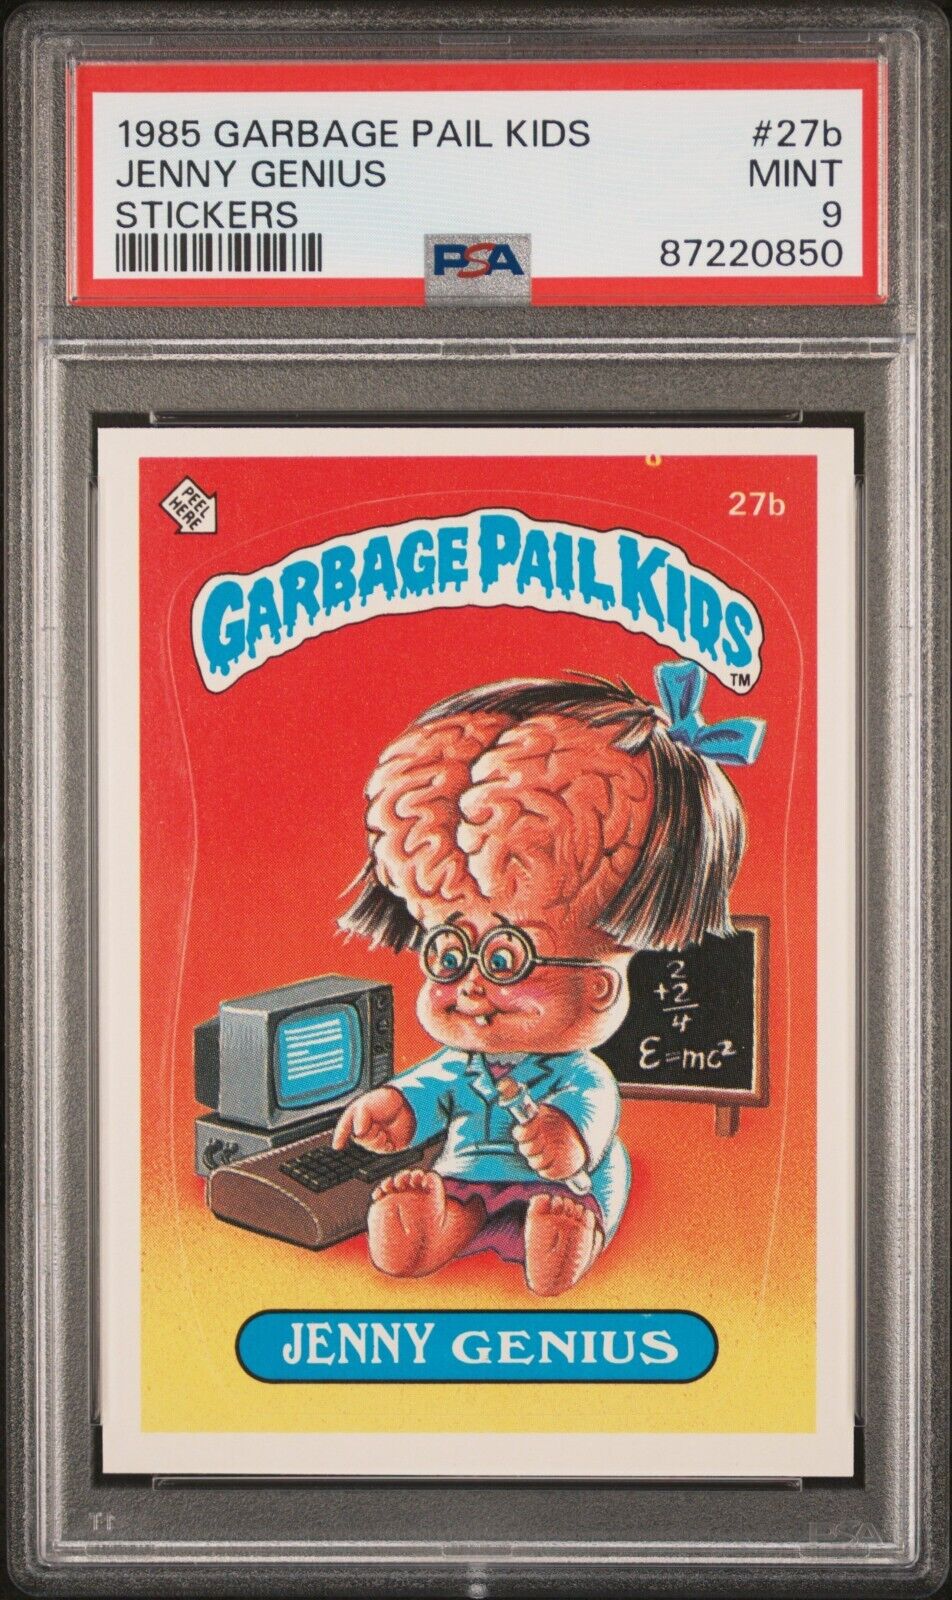 1985 Topps OS1 Garbage Pail Kids Series 1 Jenny Genius 27b Matte Card PSA 9 MINT